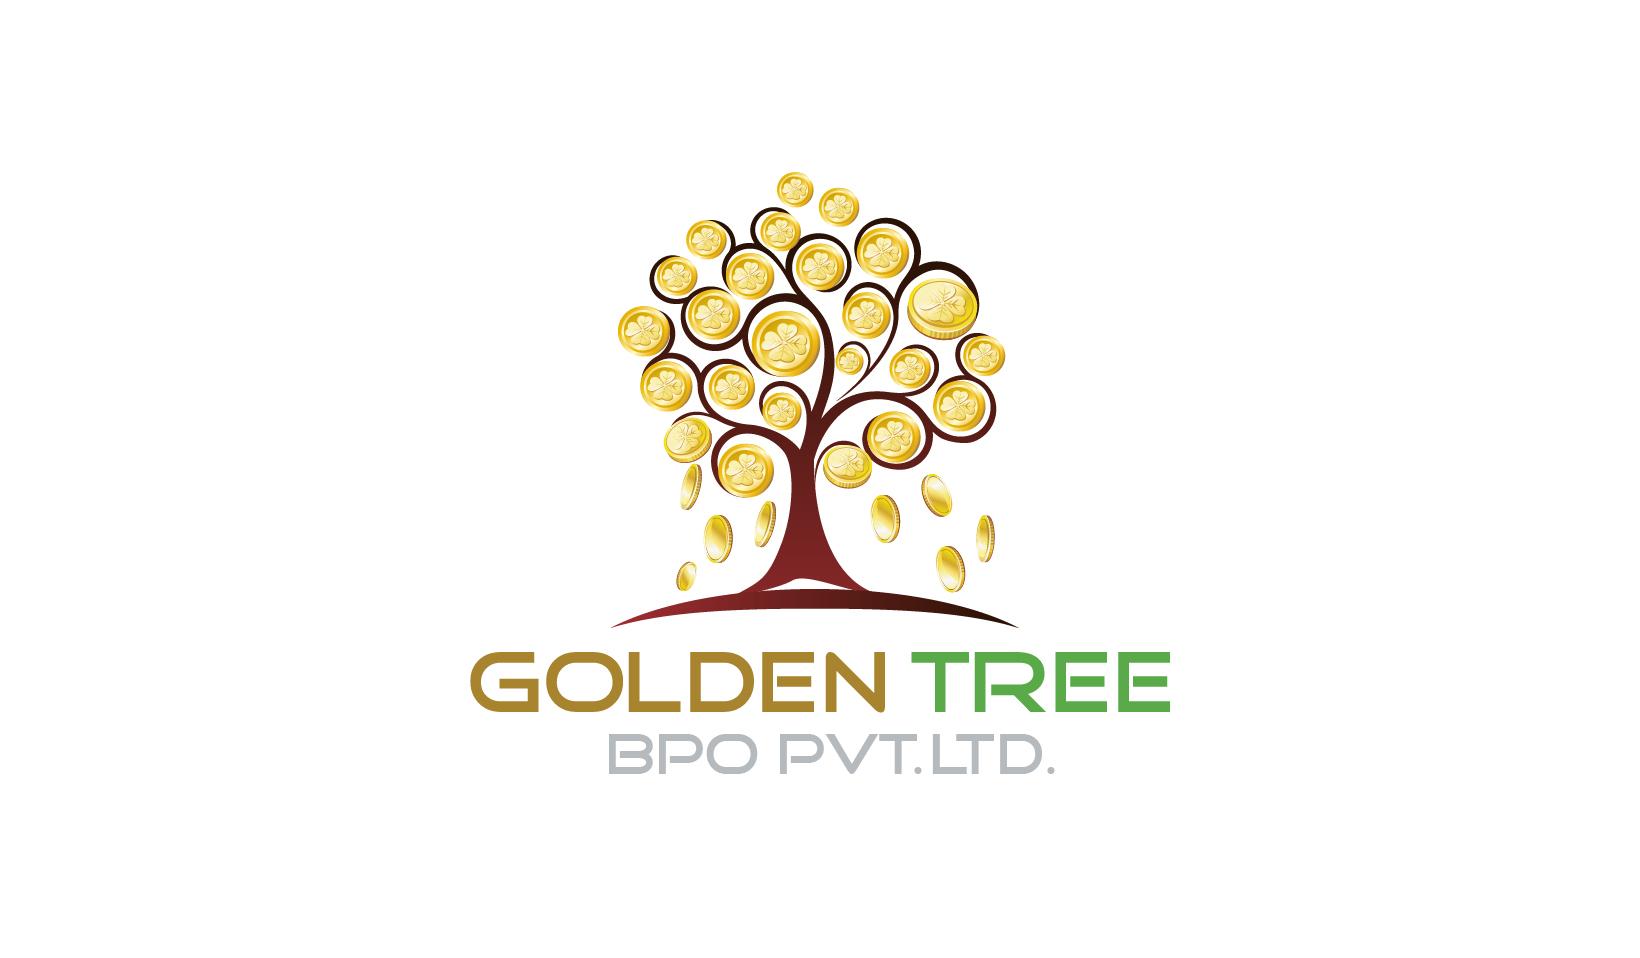 Looks Like a Golden Tree Logo - Golden Tree